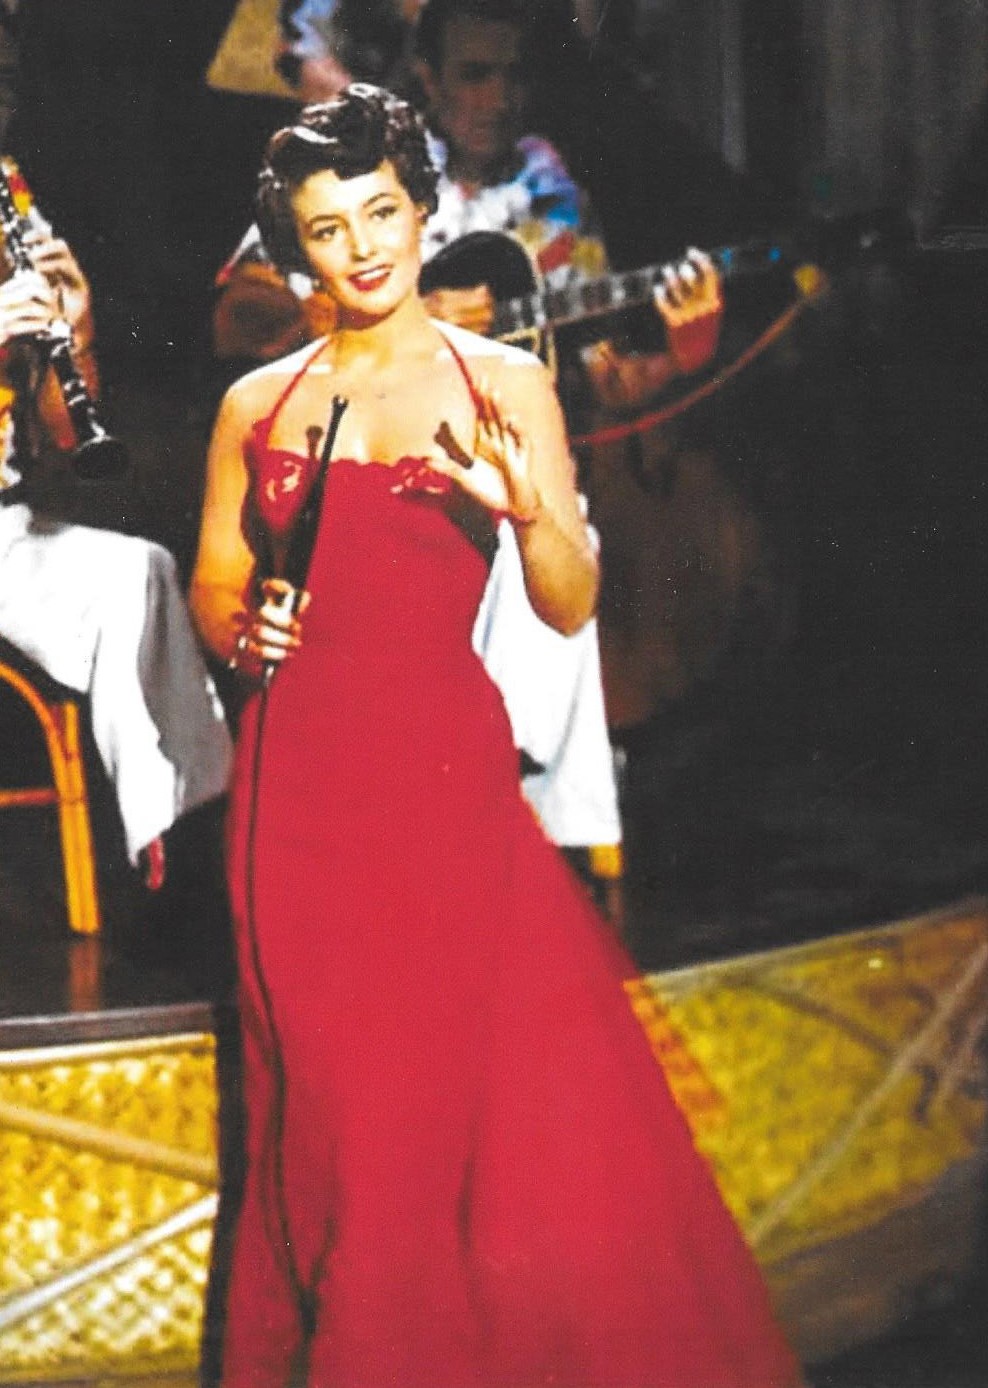  Jo Ann Greer provided May Wynn’s singing “voice” for the nightclub scene. 